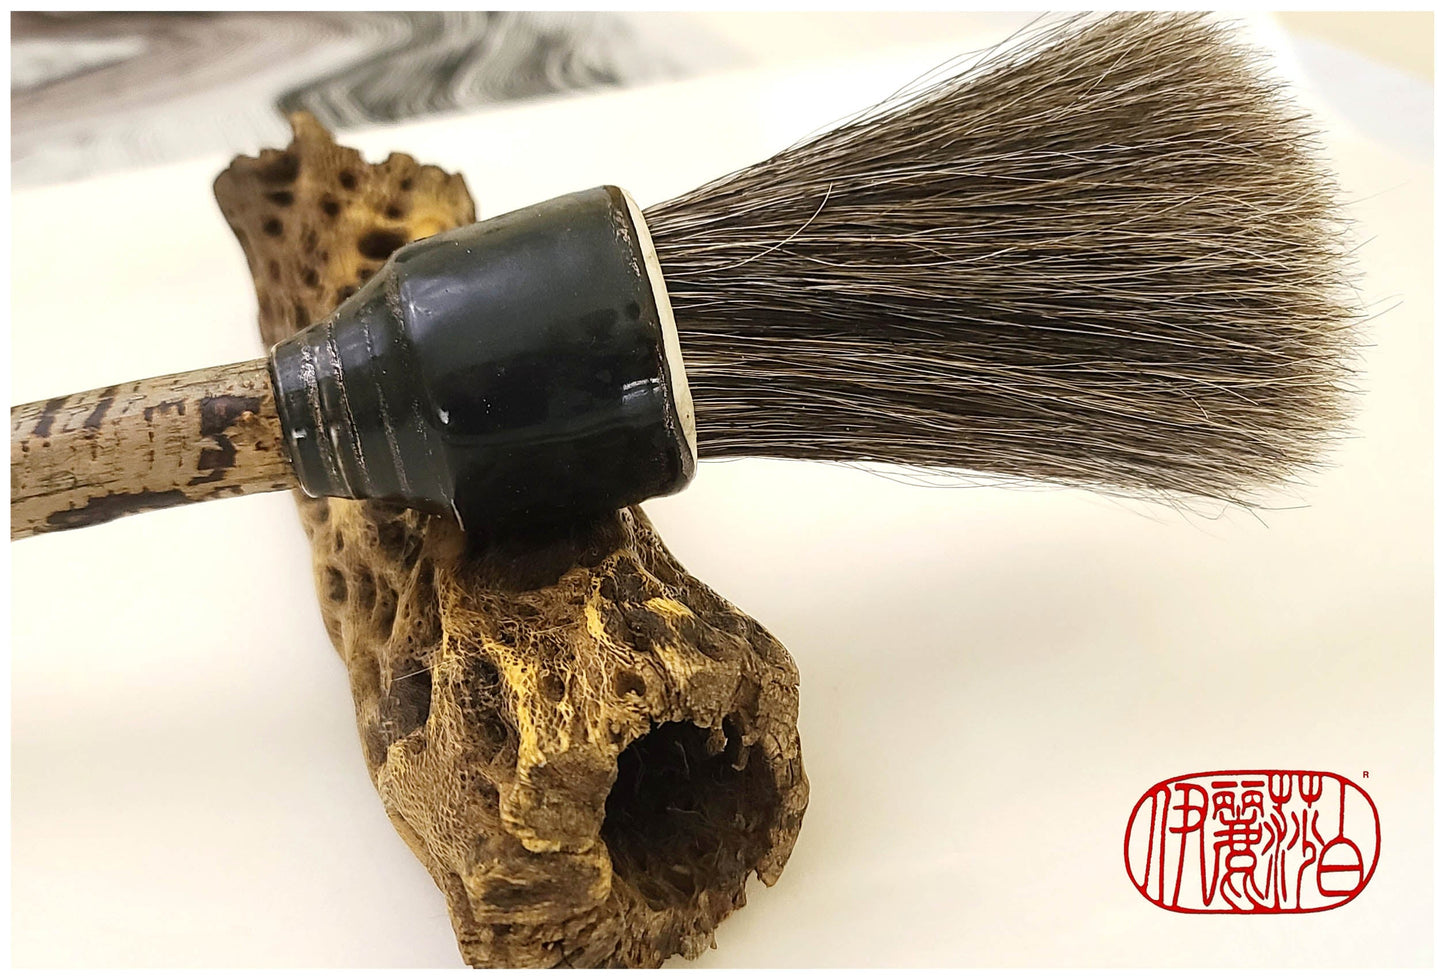 Mixed Horsehair Sumi-e Paint Brush with Ceramic Ferrule #130 Art Supplies Elizabeth Schowachert Art